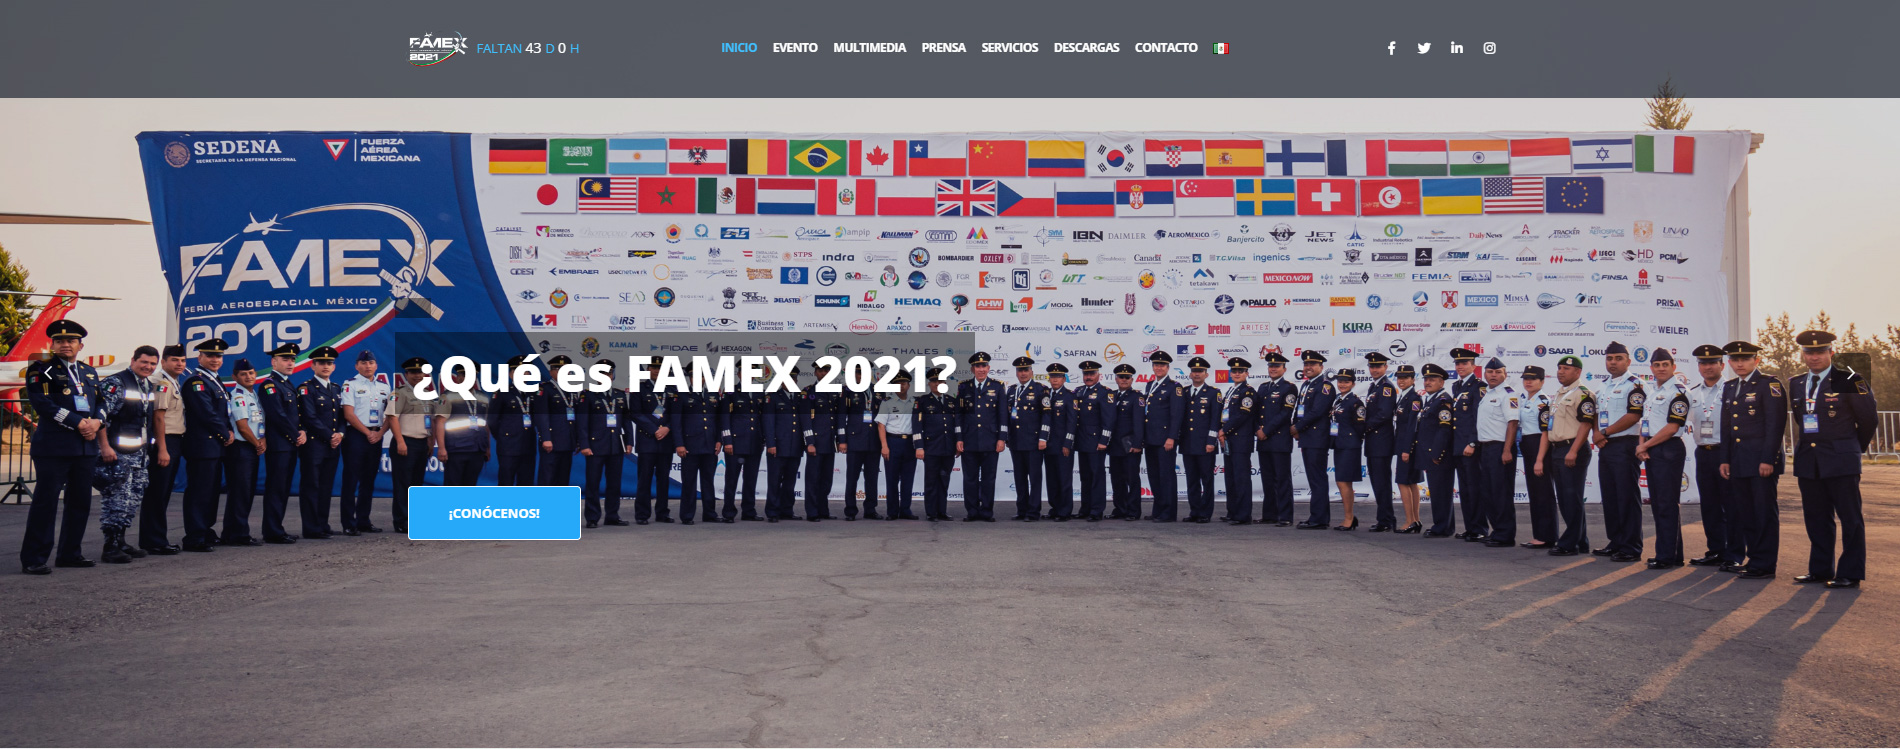 GH將參加2021年的Famex